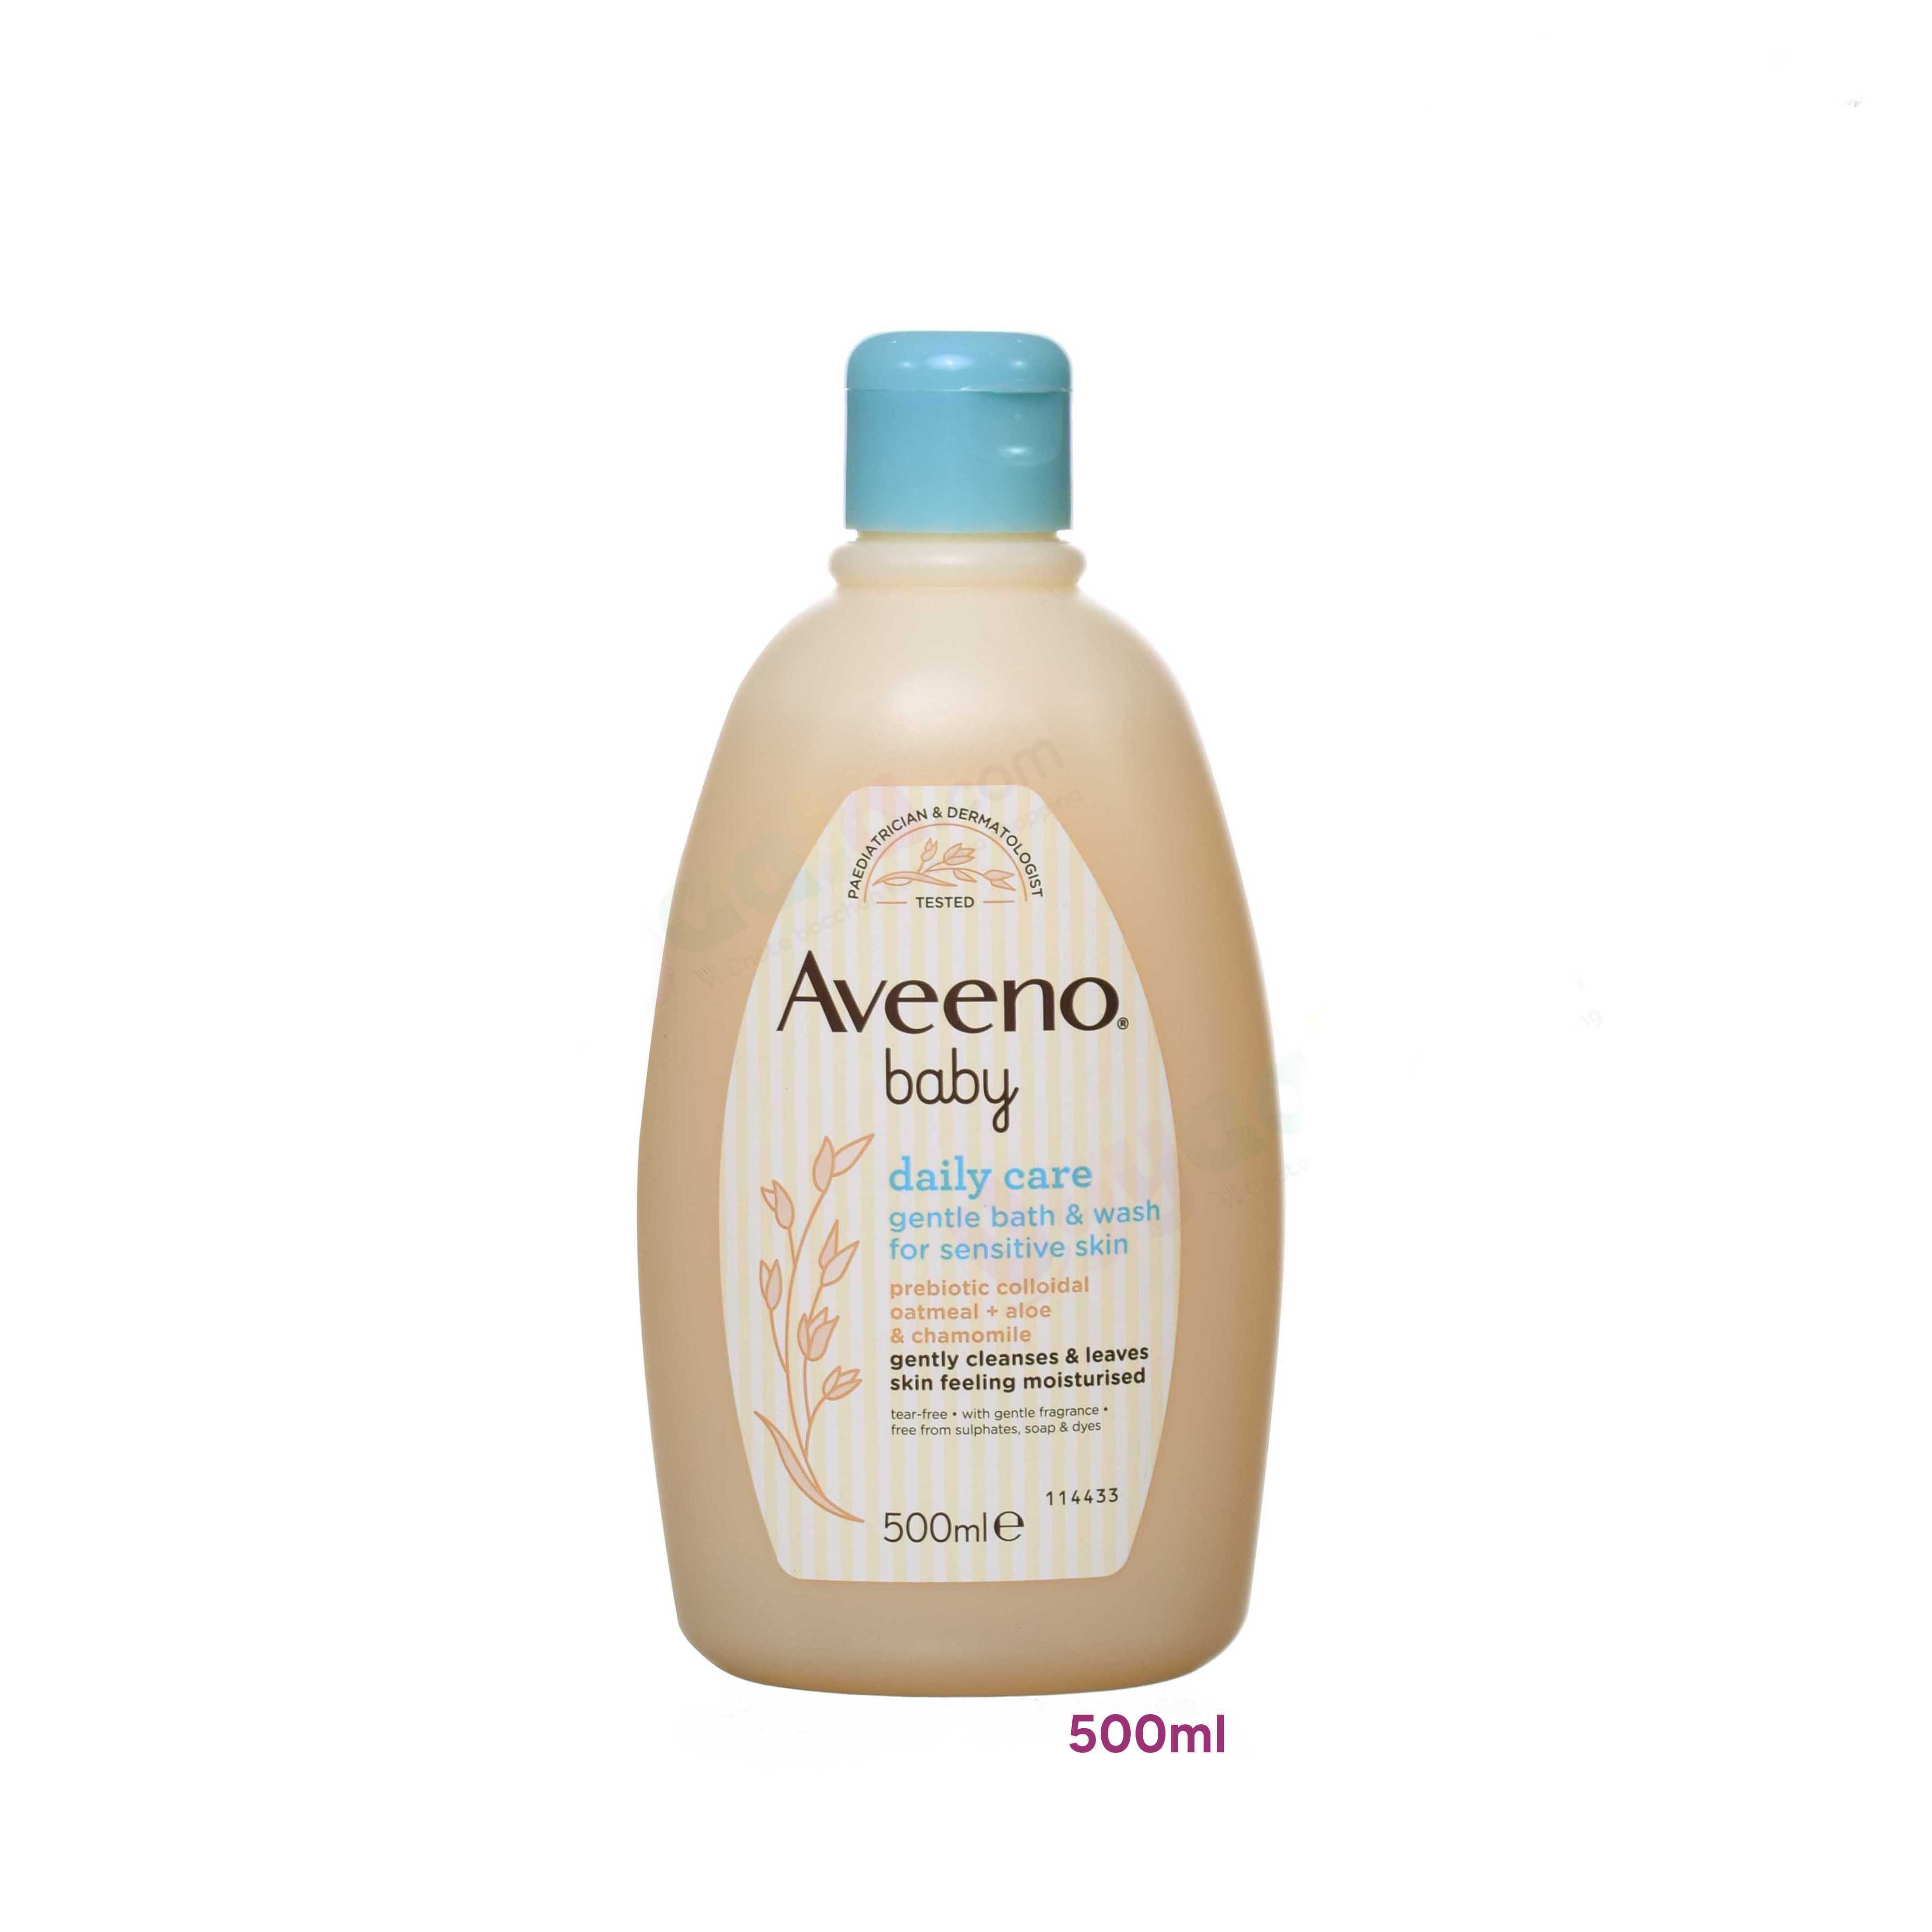 AVEENO BABY Daily care gentle bath & wash for sensitive skin 500ml